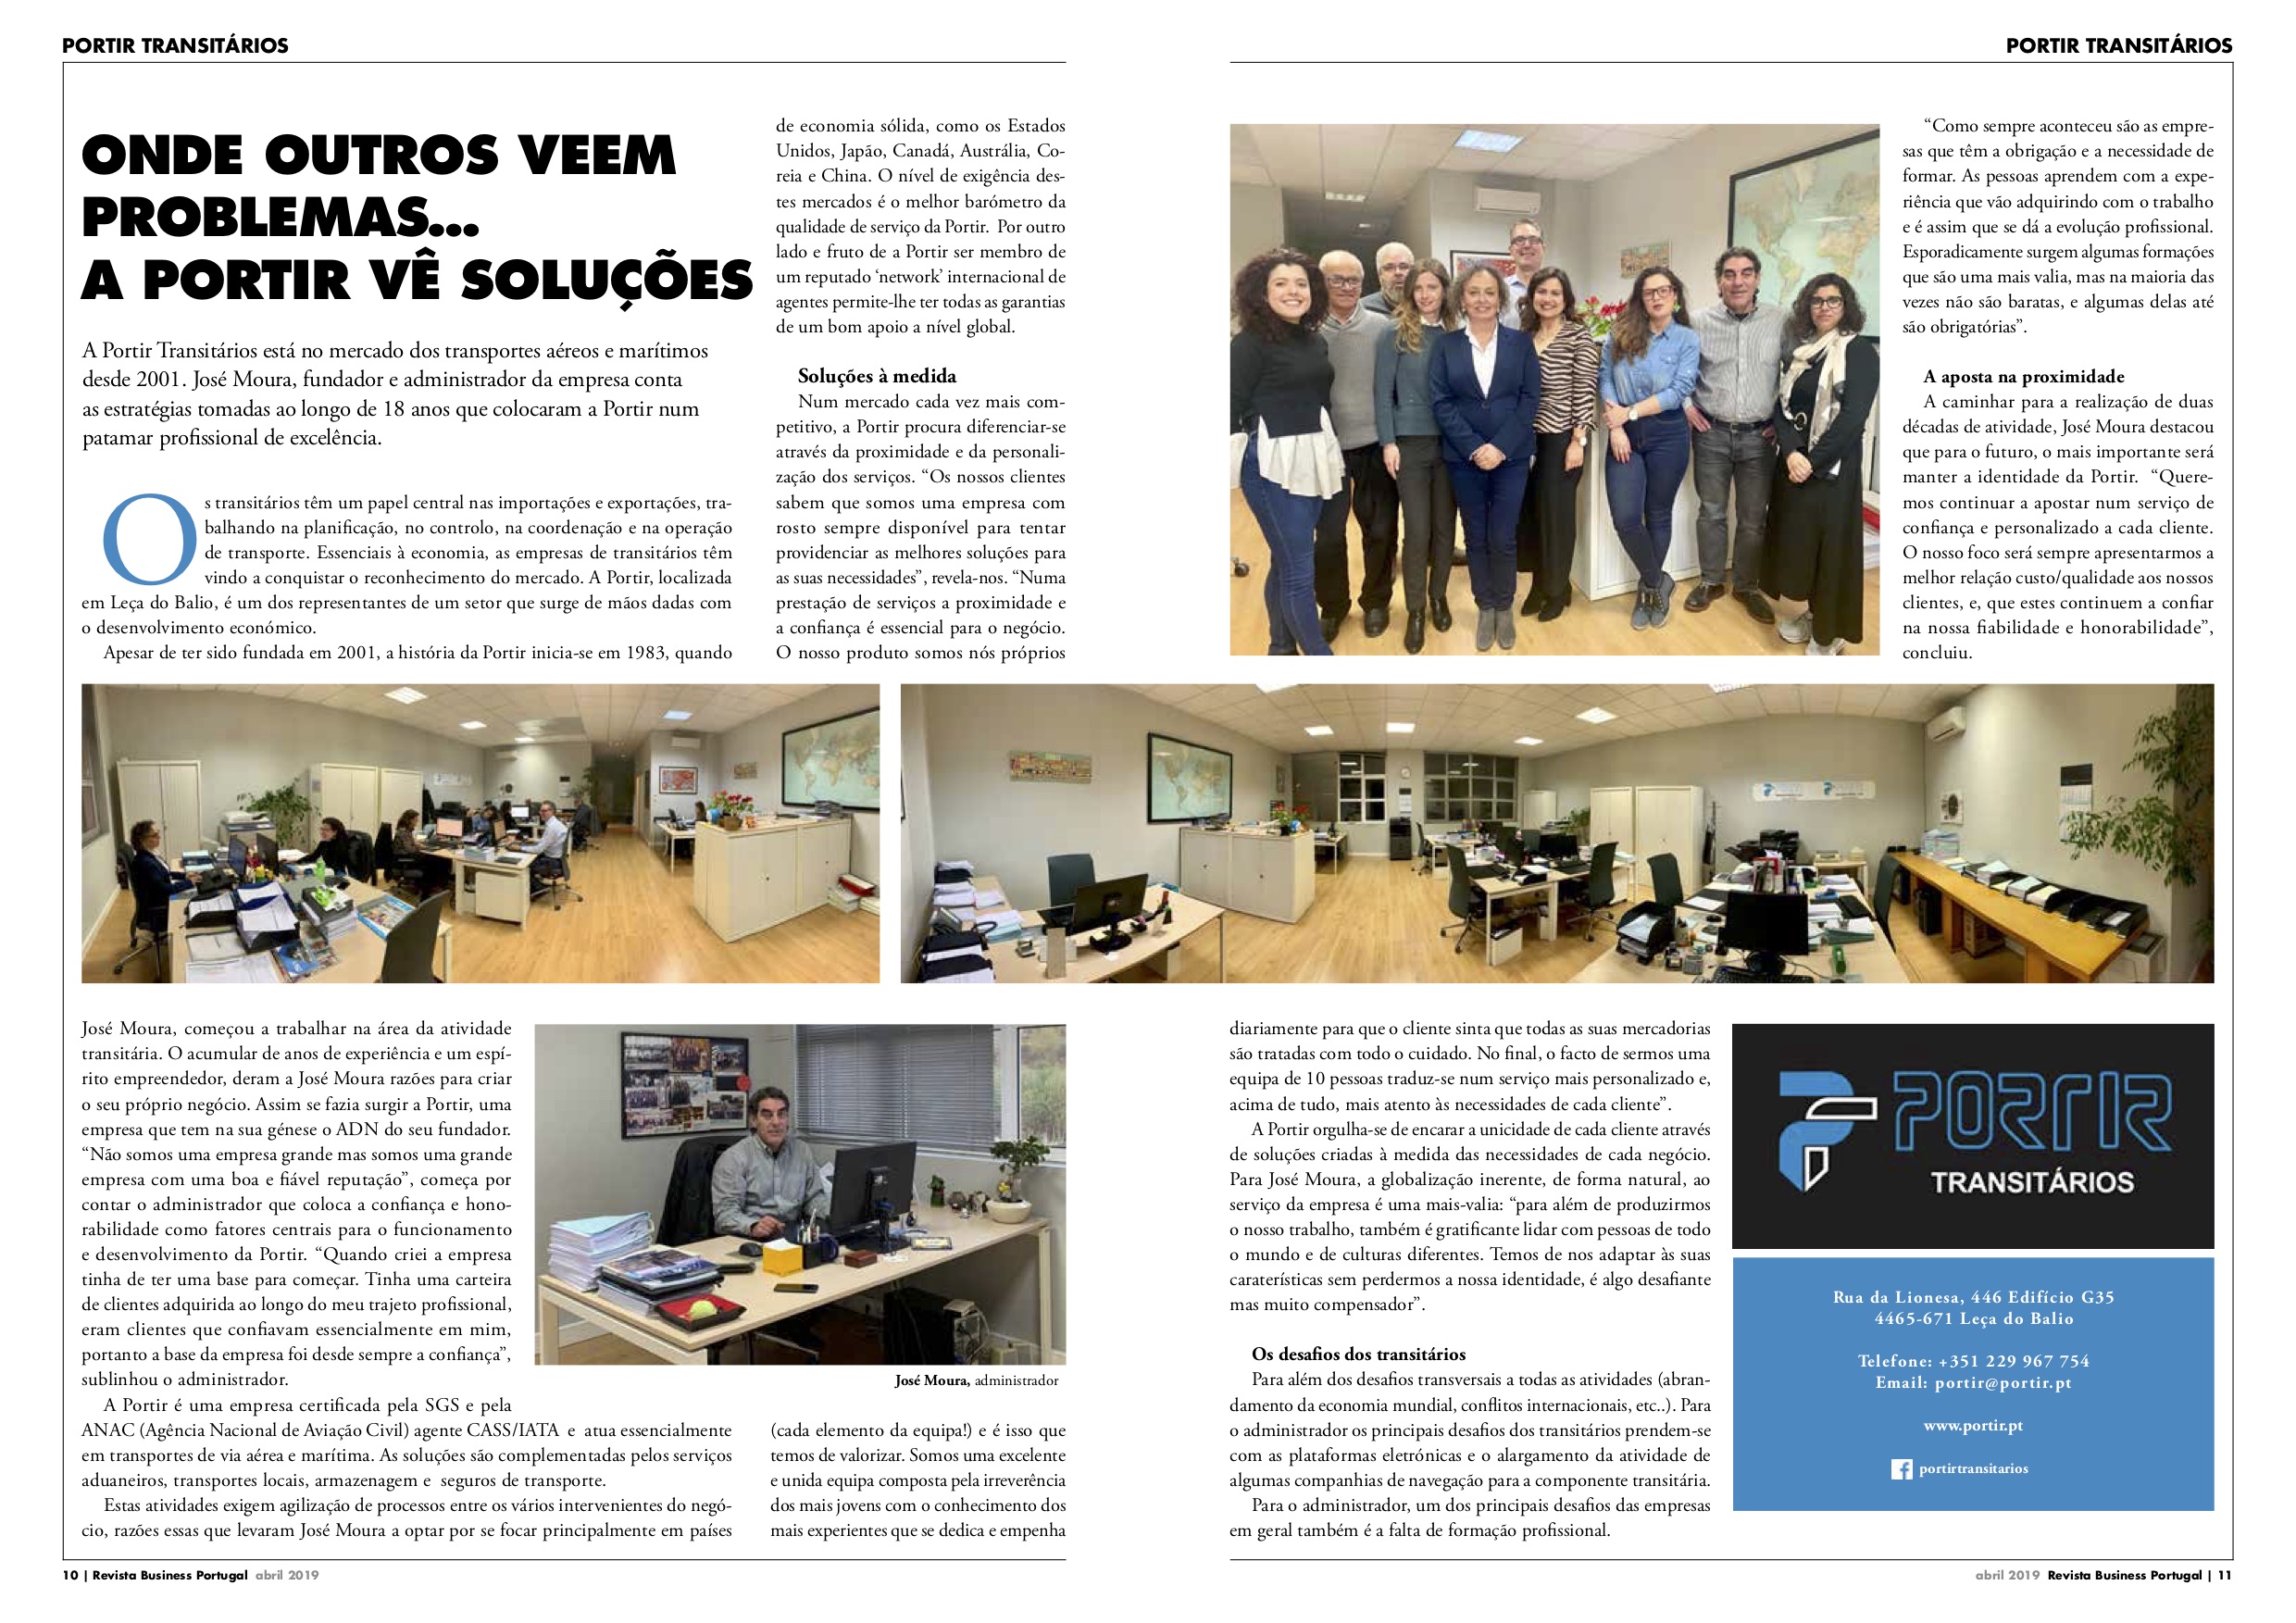 Portir Transitários in the Business Magazine - Jornal Público